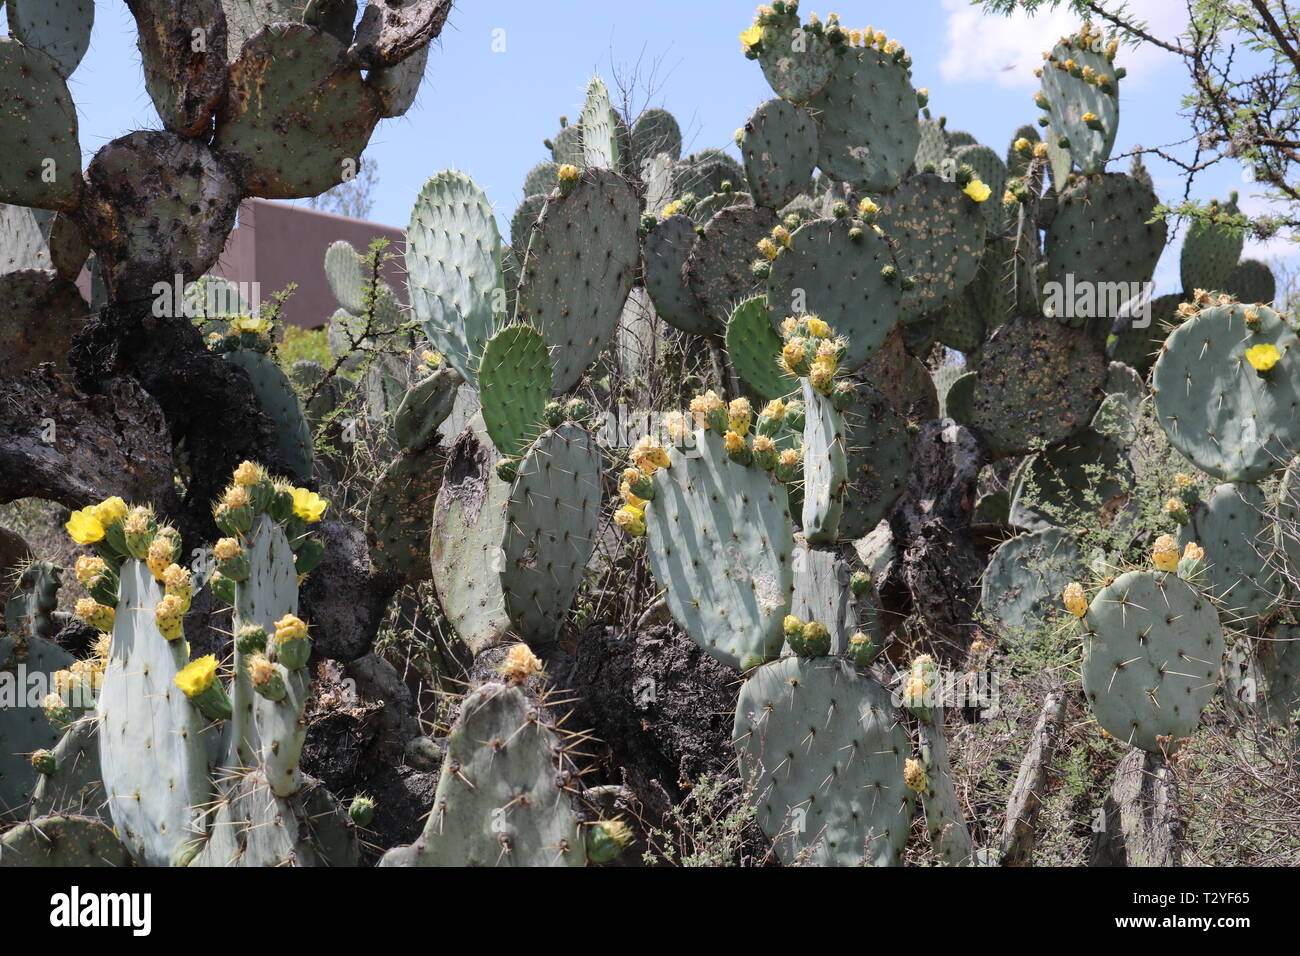 Cactus landscape Stock Photo